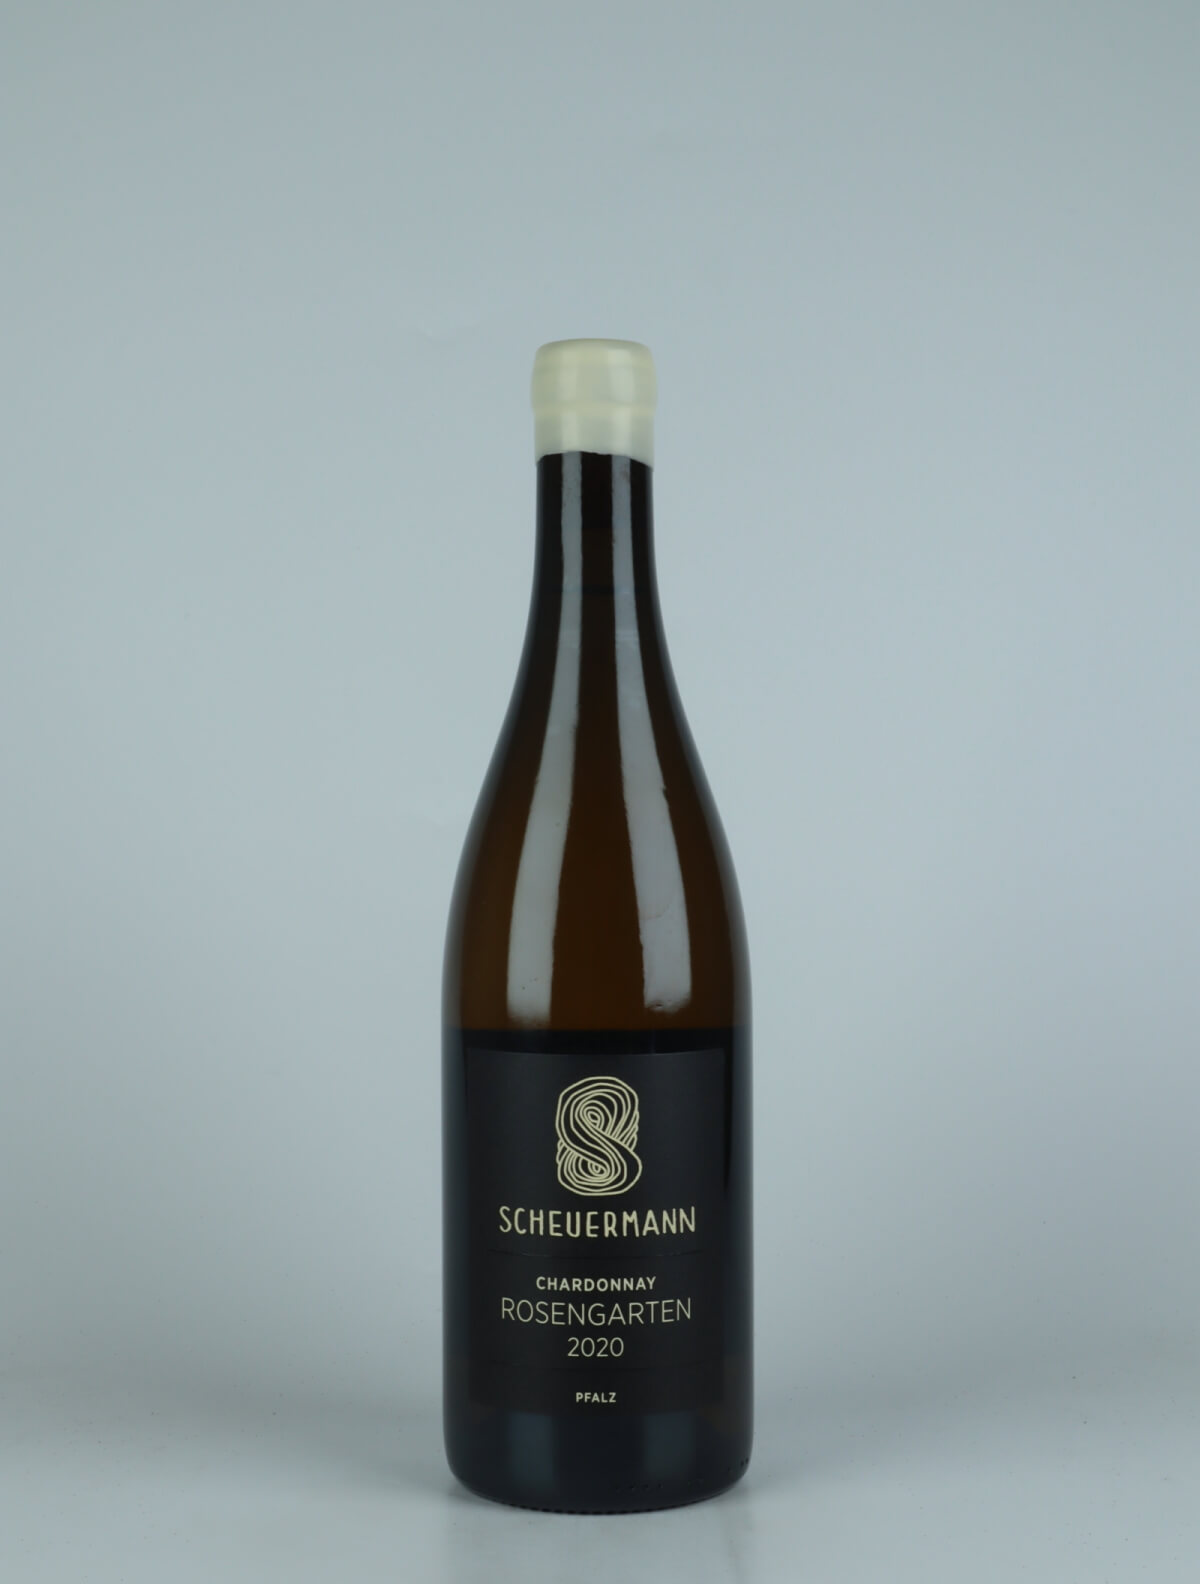 A bottle 2020 Chardonnay Rosengarten White wine from Weingut Scheuermann, Pfalz in Germany